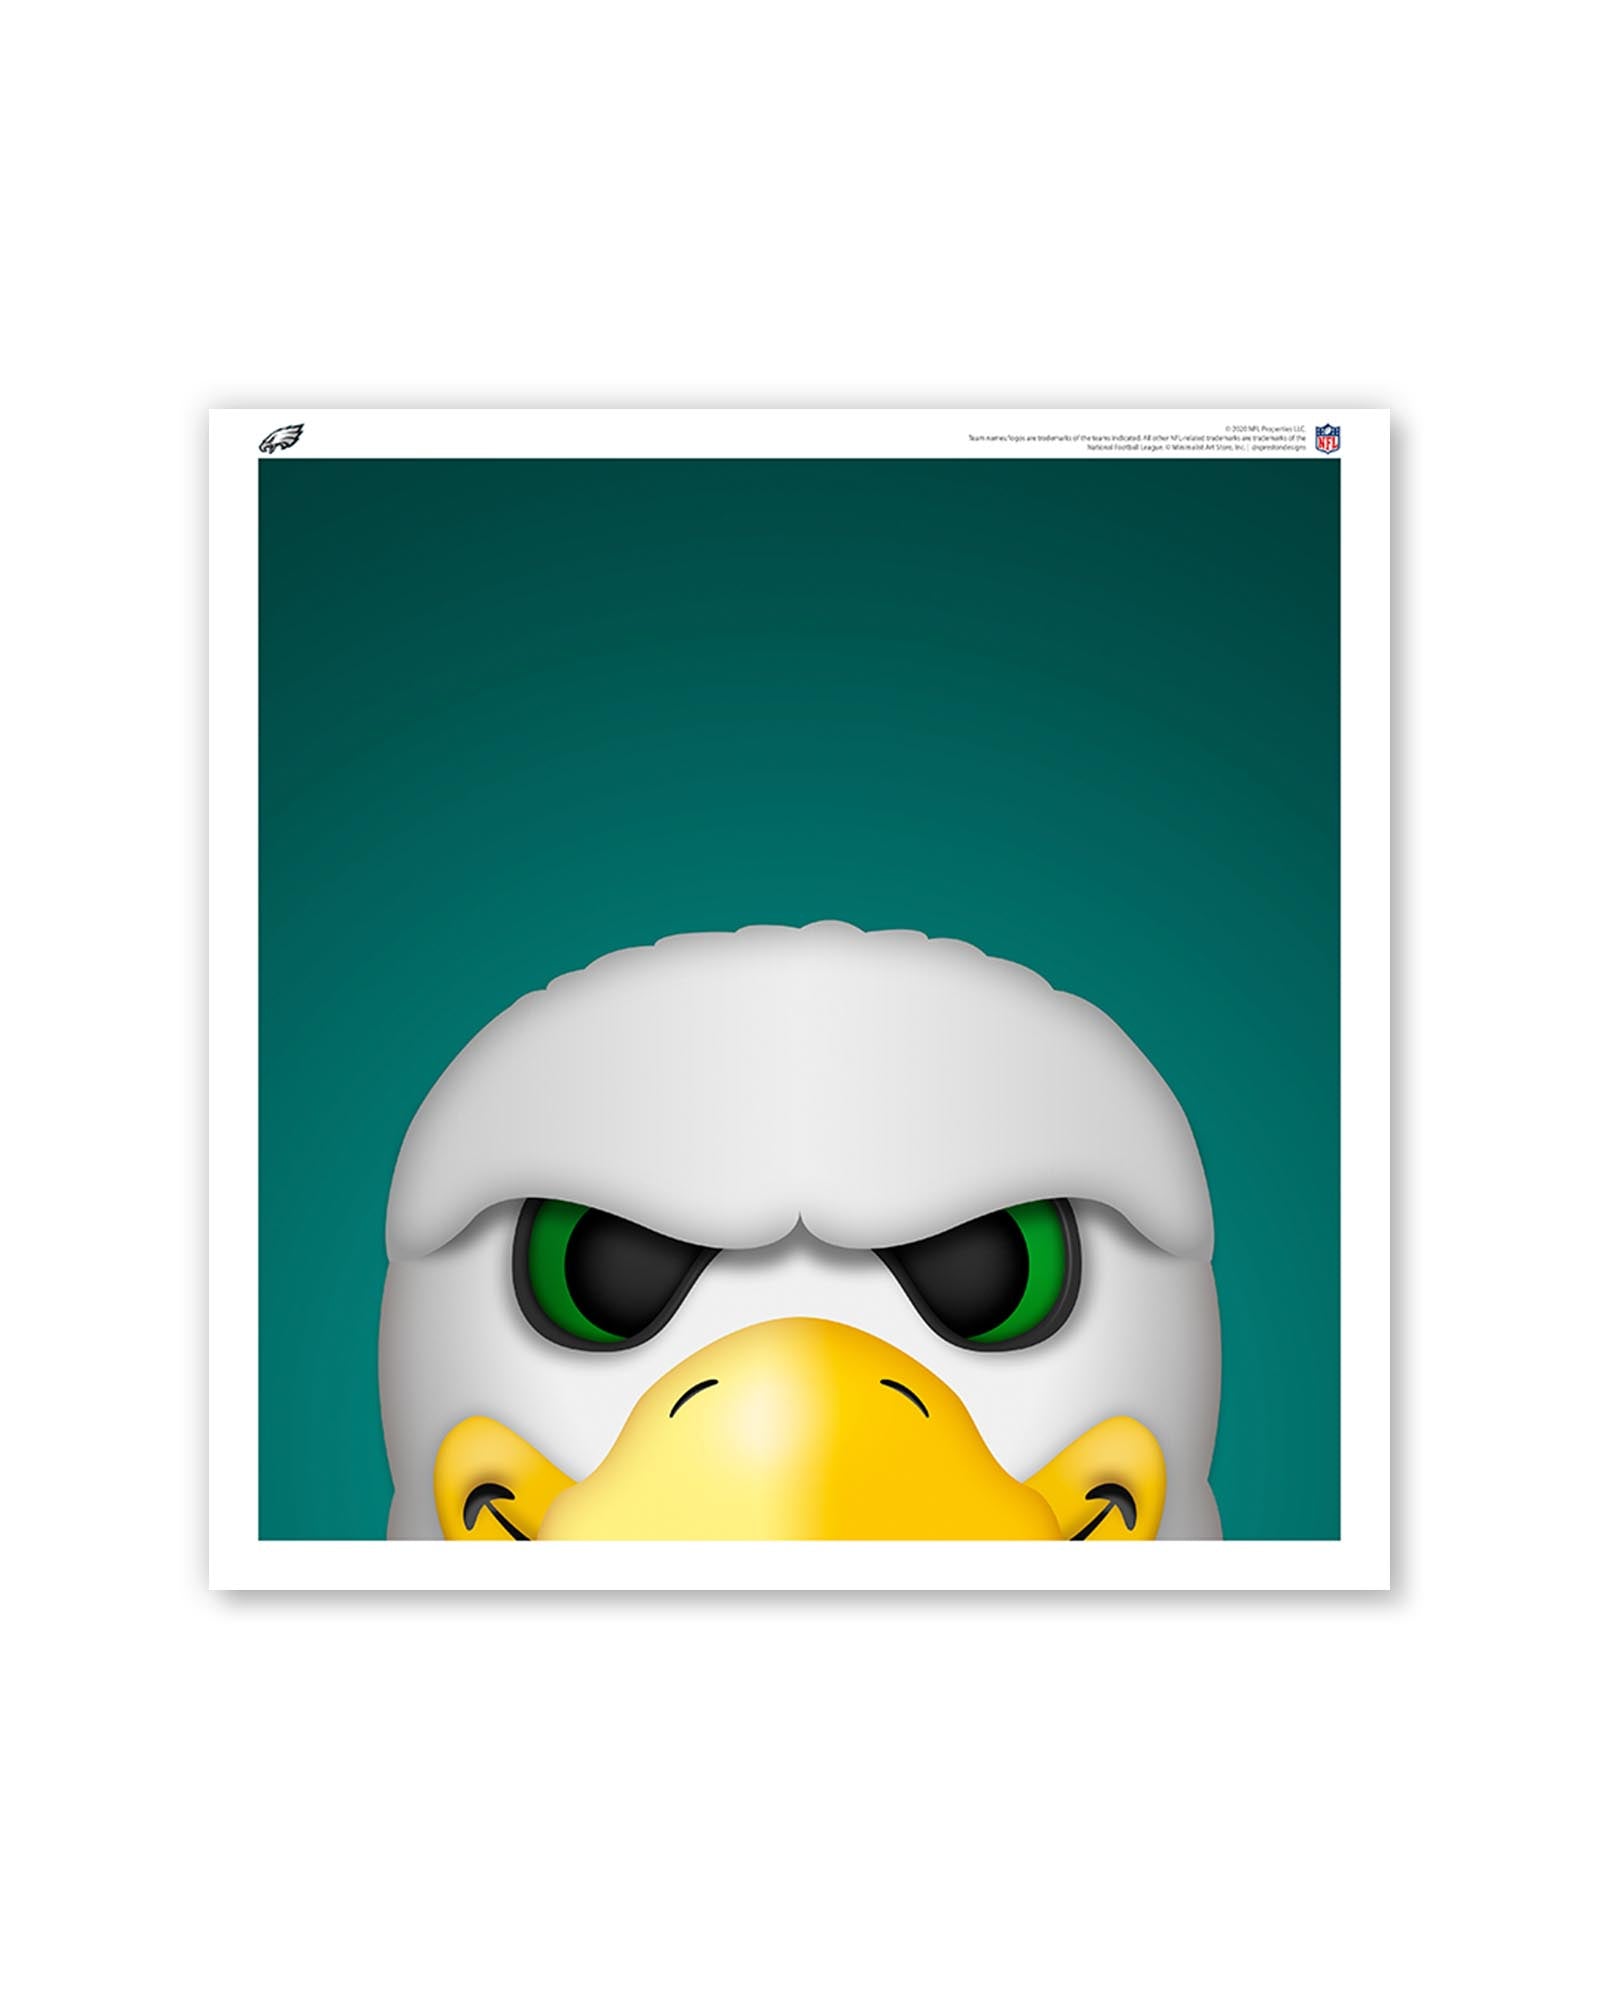 Minimalist Swoop Philadelphia Eagles Mascot square poster print